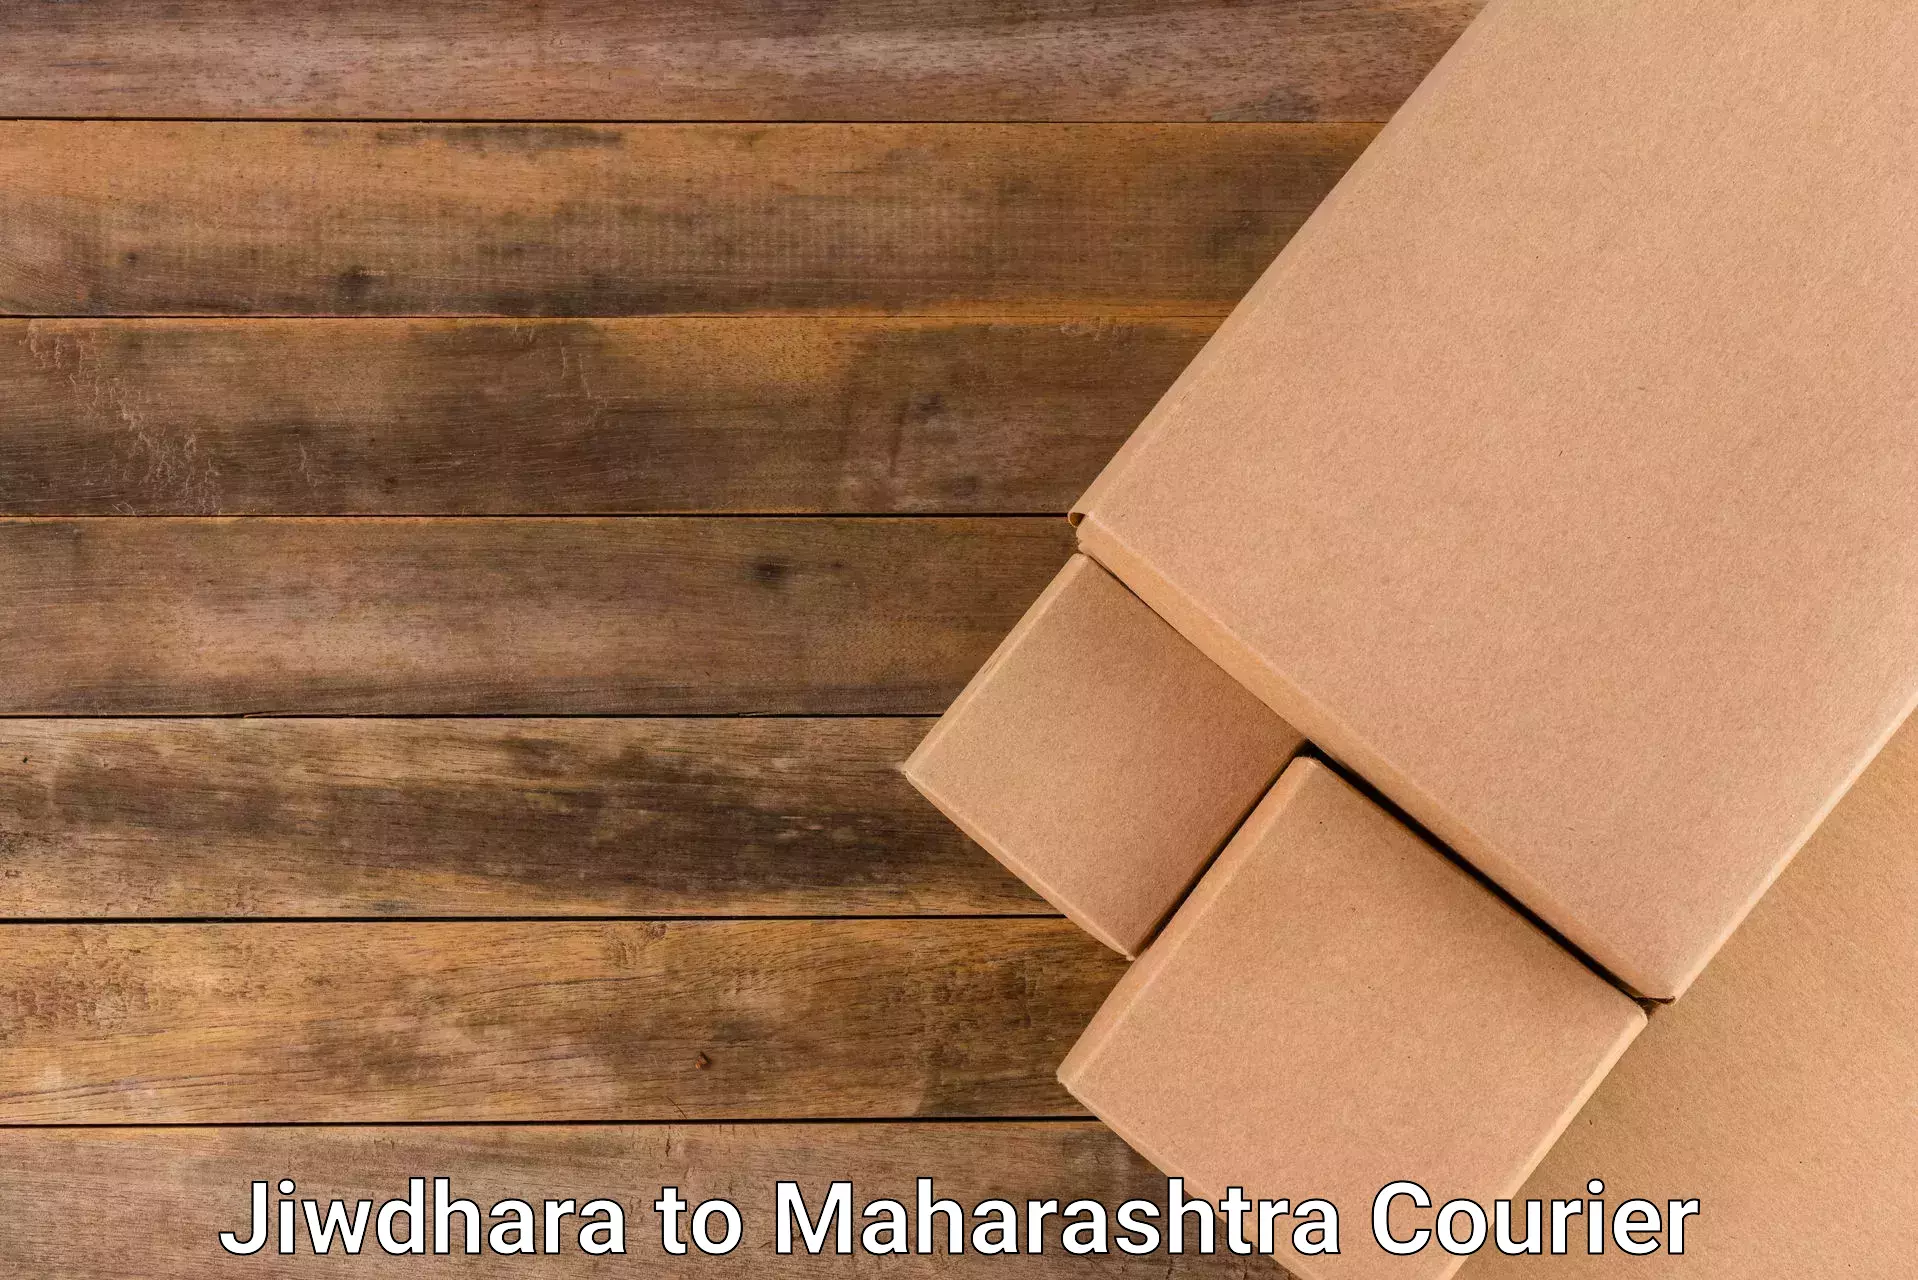 Courier service partnerships Jiwdhara to Kankavali